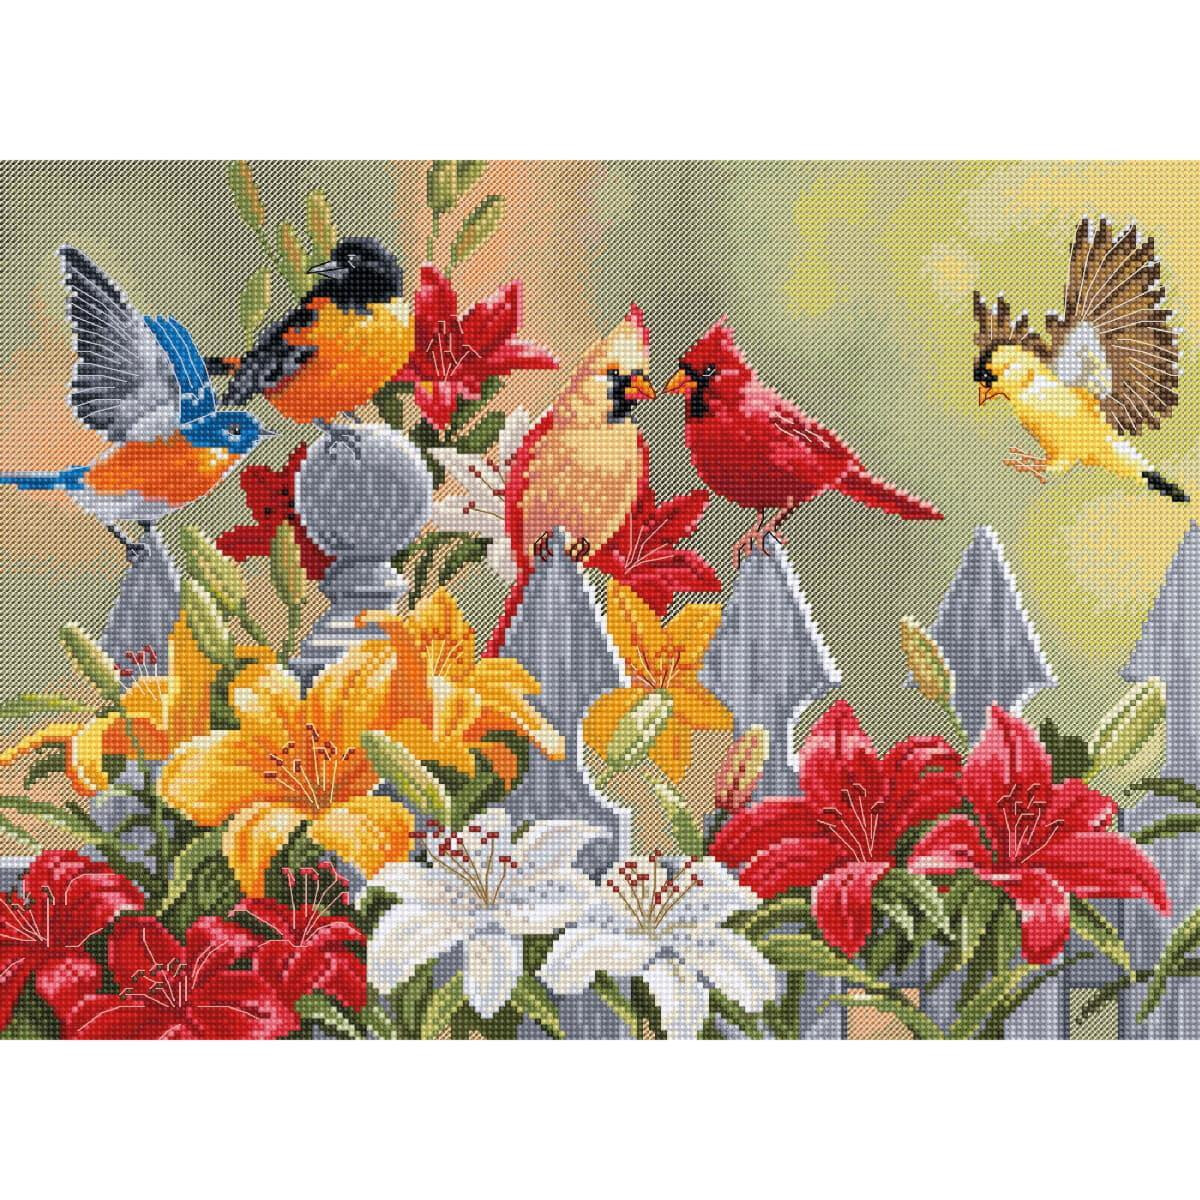 Un gruppo di uccelli colorati, tra cui cardinali rossi e...